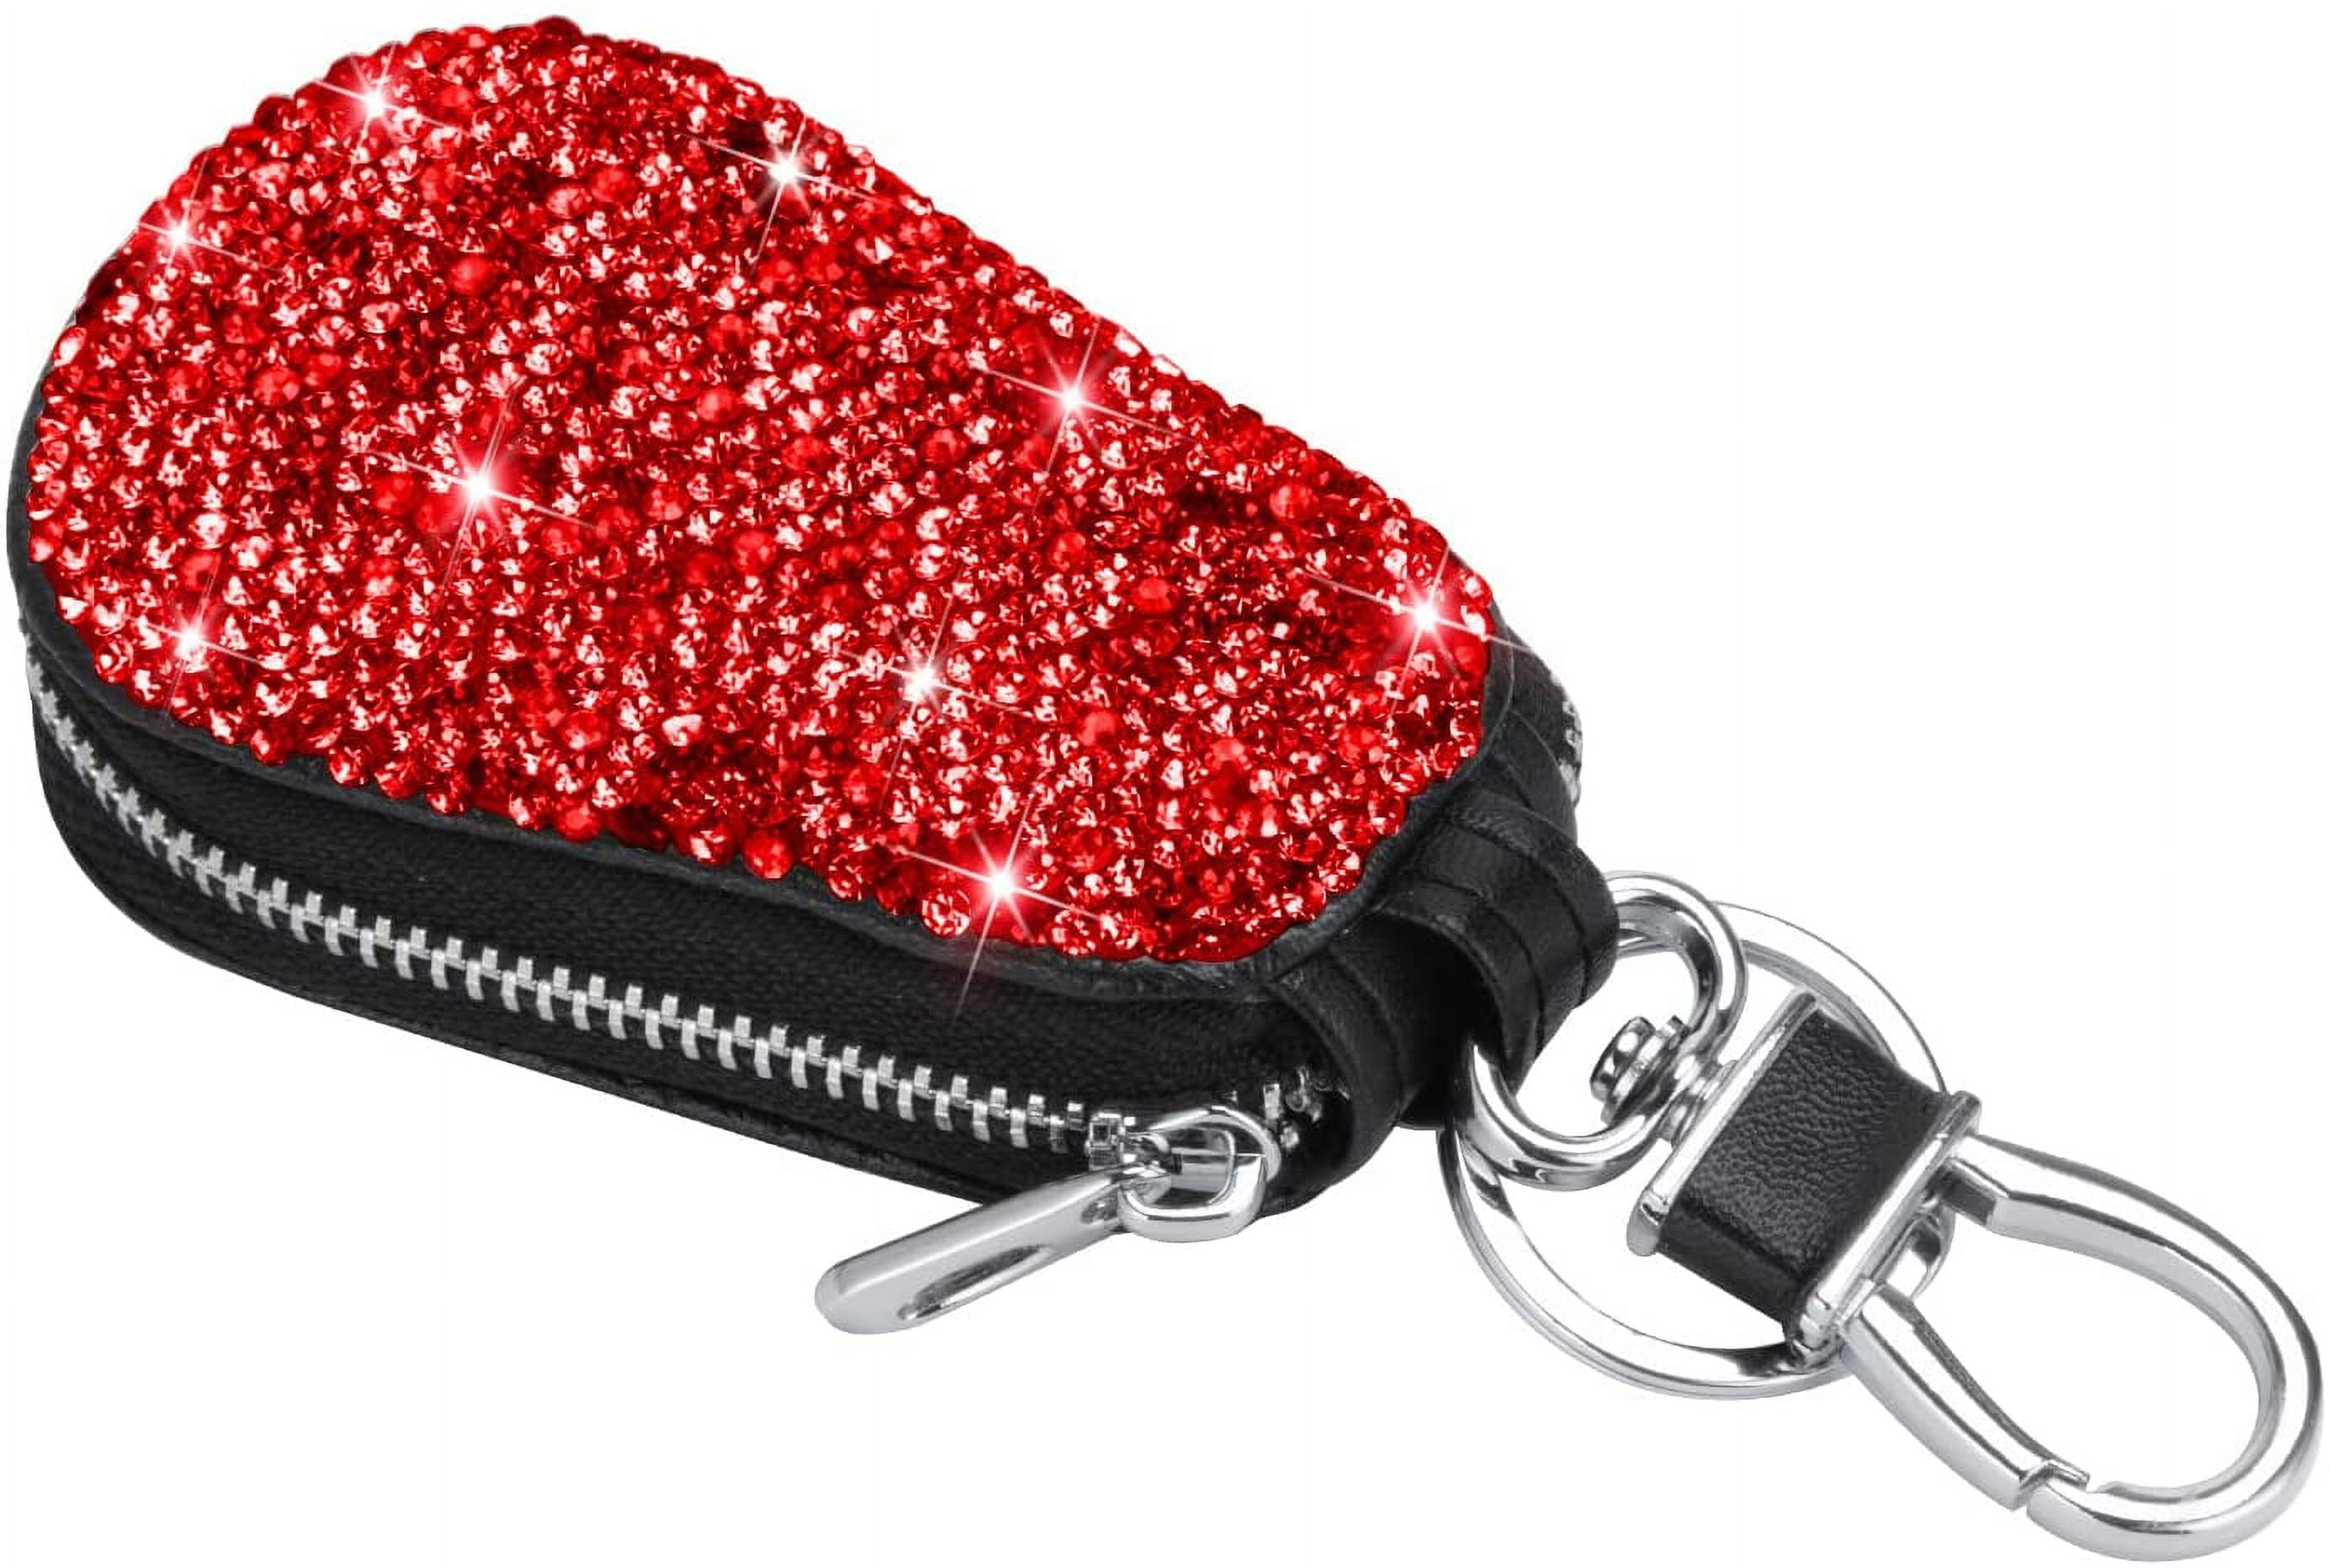 Red Heart Bag Charm Key Ring Fob Keychain Purse Charm Chain Strap New | eBay